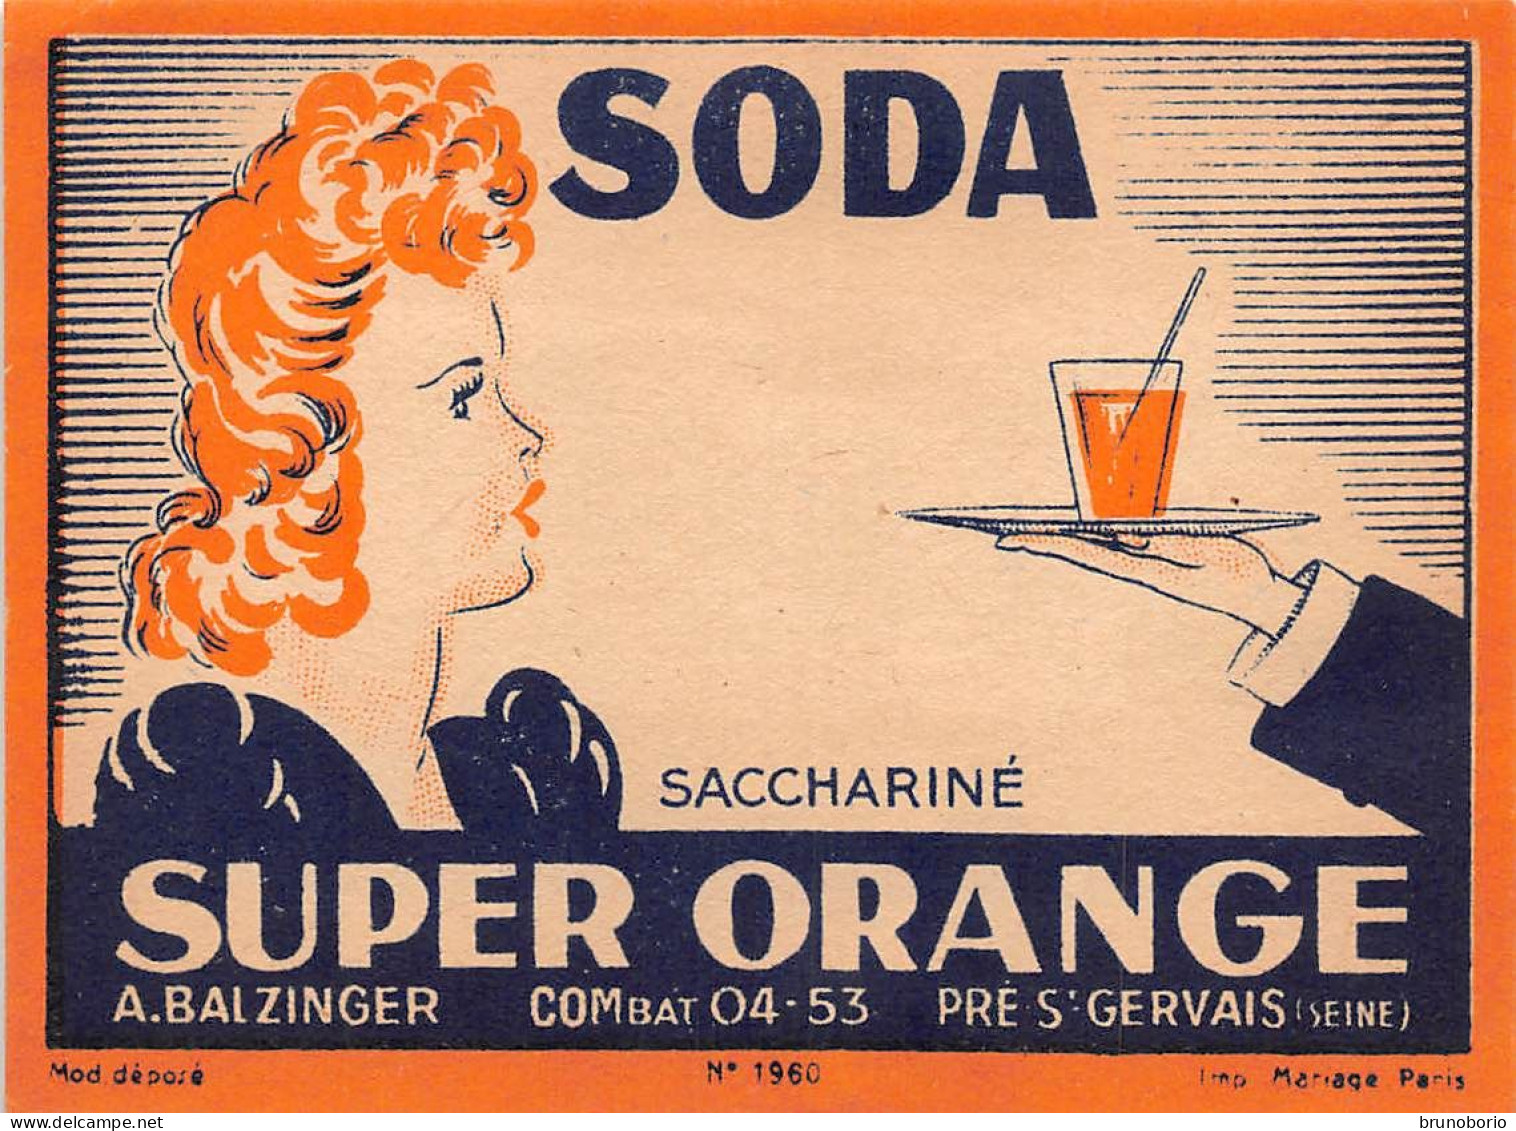 00148  "SODA SACCHARINE - SUPER ORANGE - A. BALZINGER - PRE S. GERVAIS (SEINE)"  ETICH. ORIG ANIMATA - Fruits Et Légumes